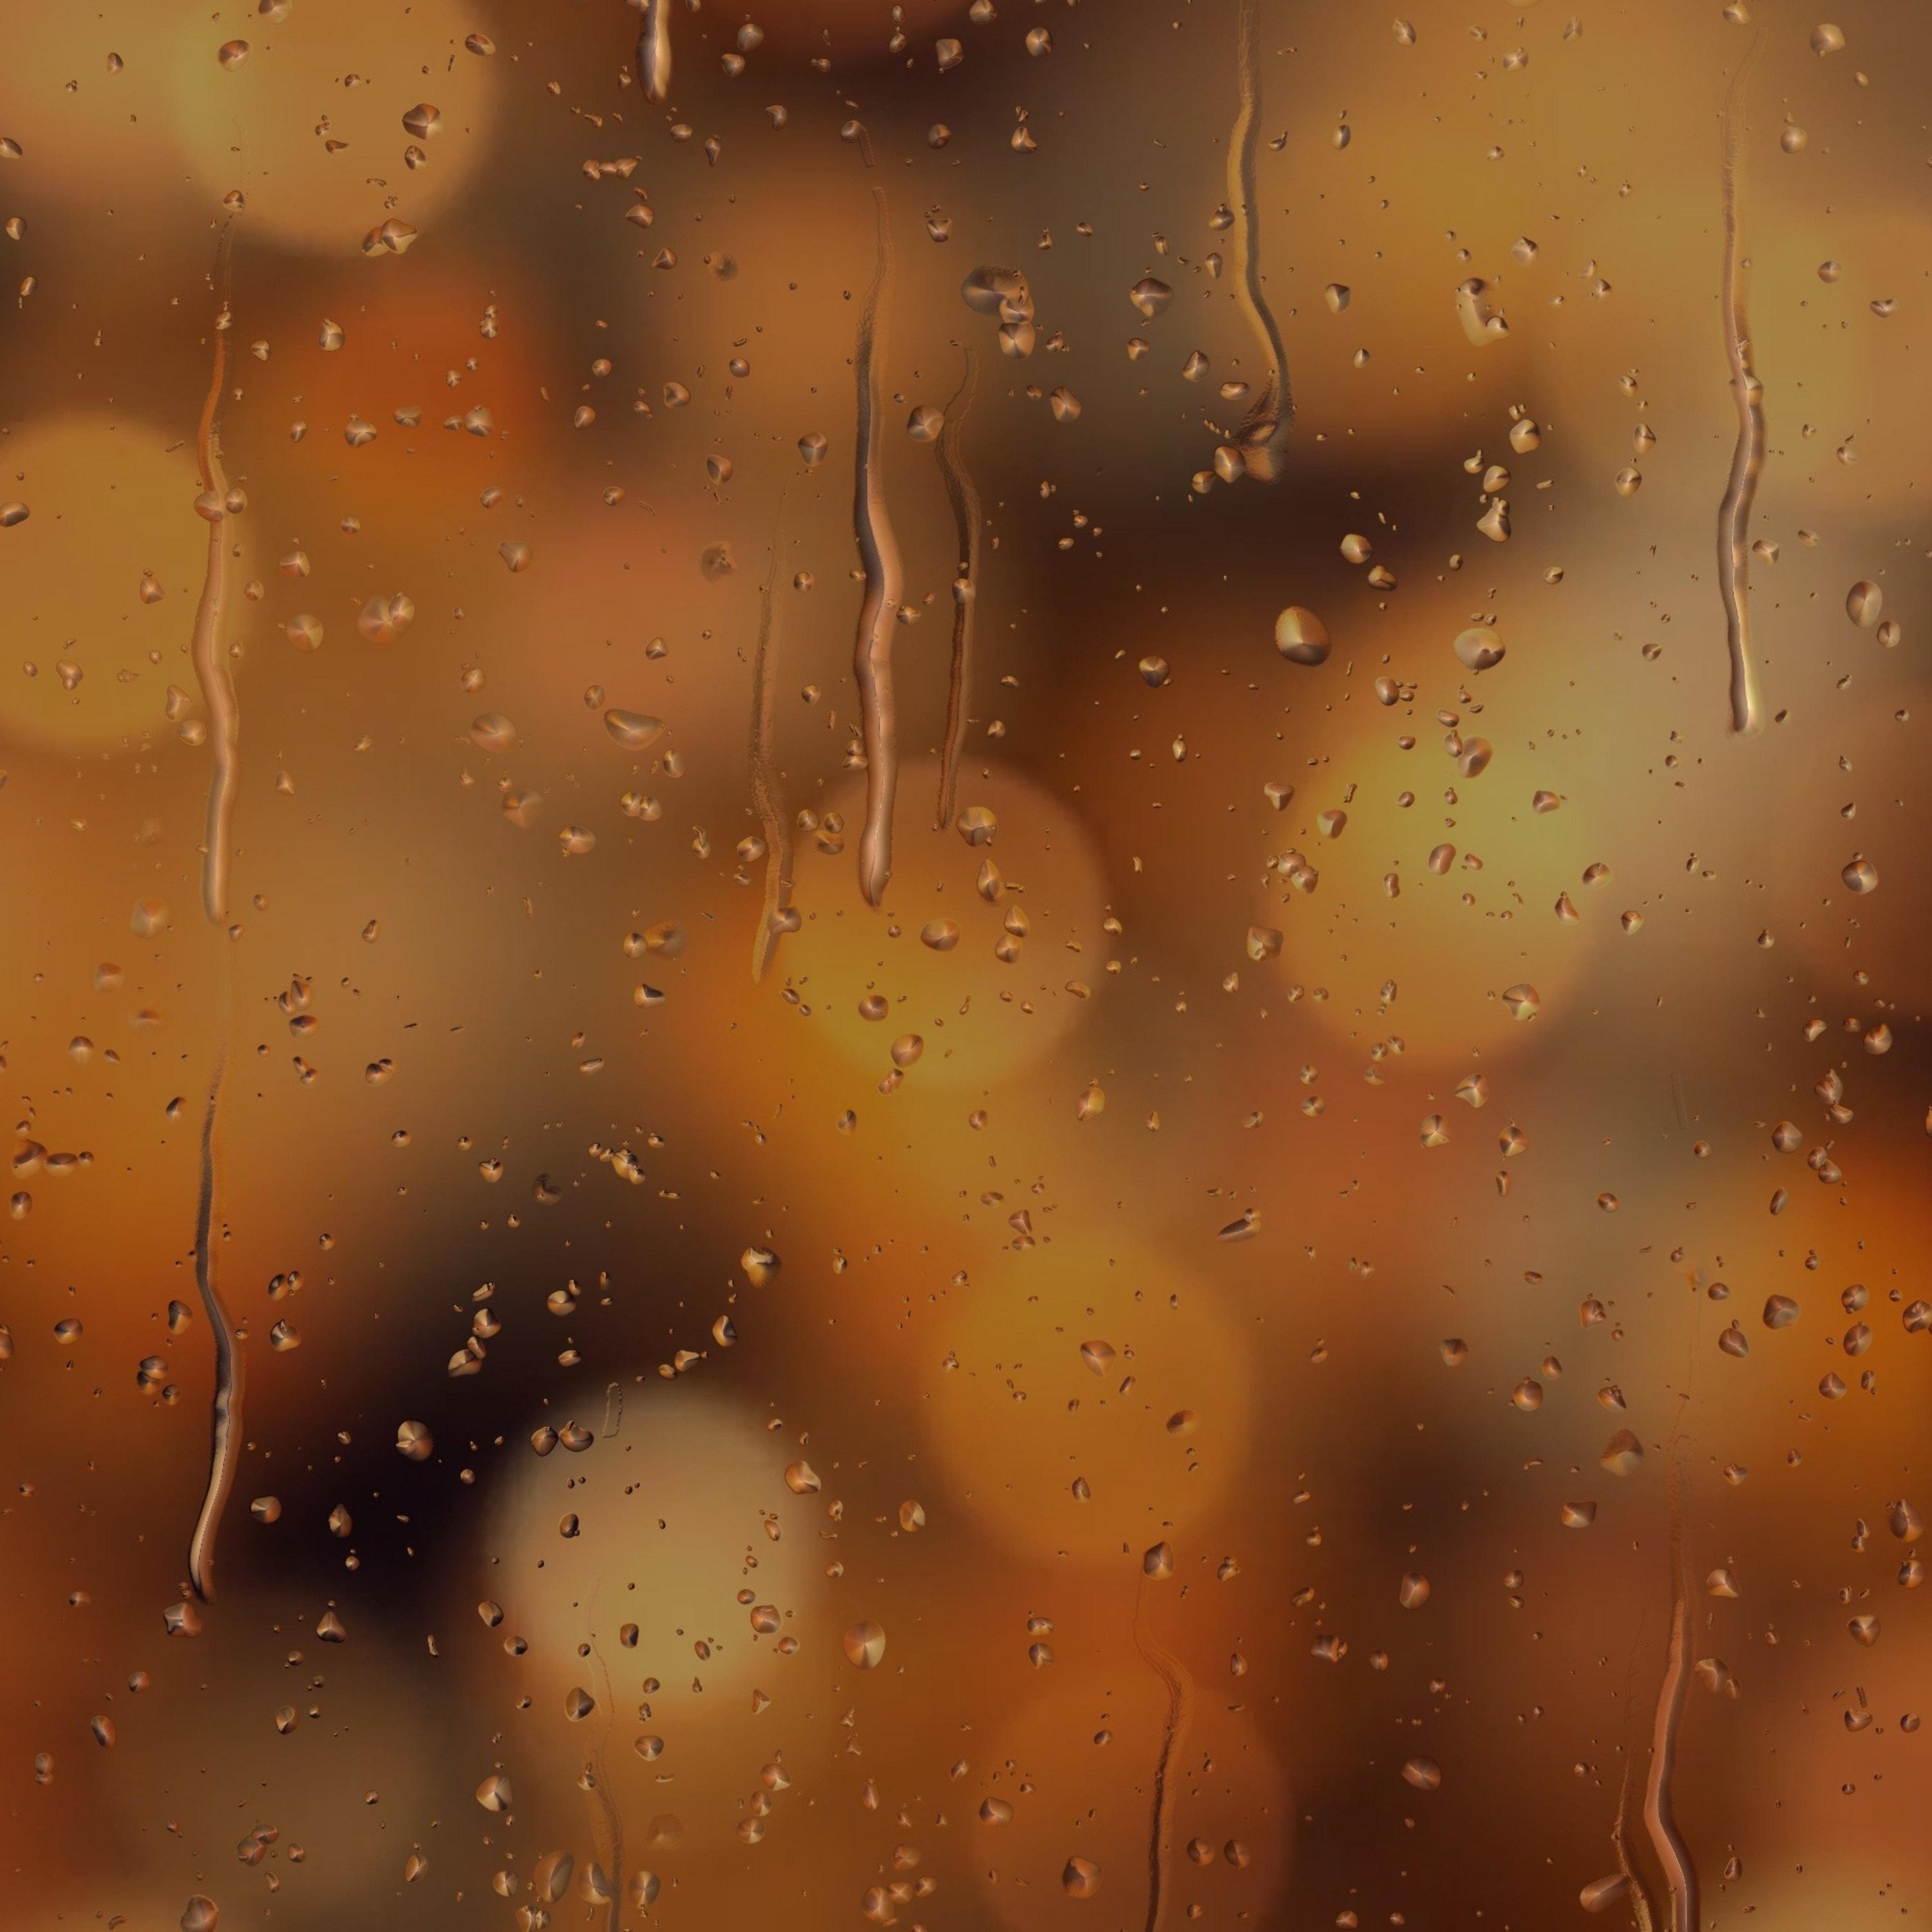 20 Sounds of Ambient Rain to Help You Sleep